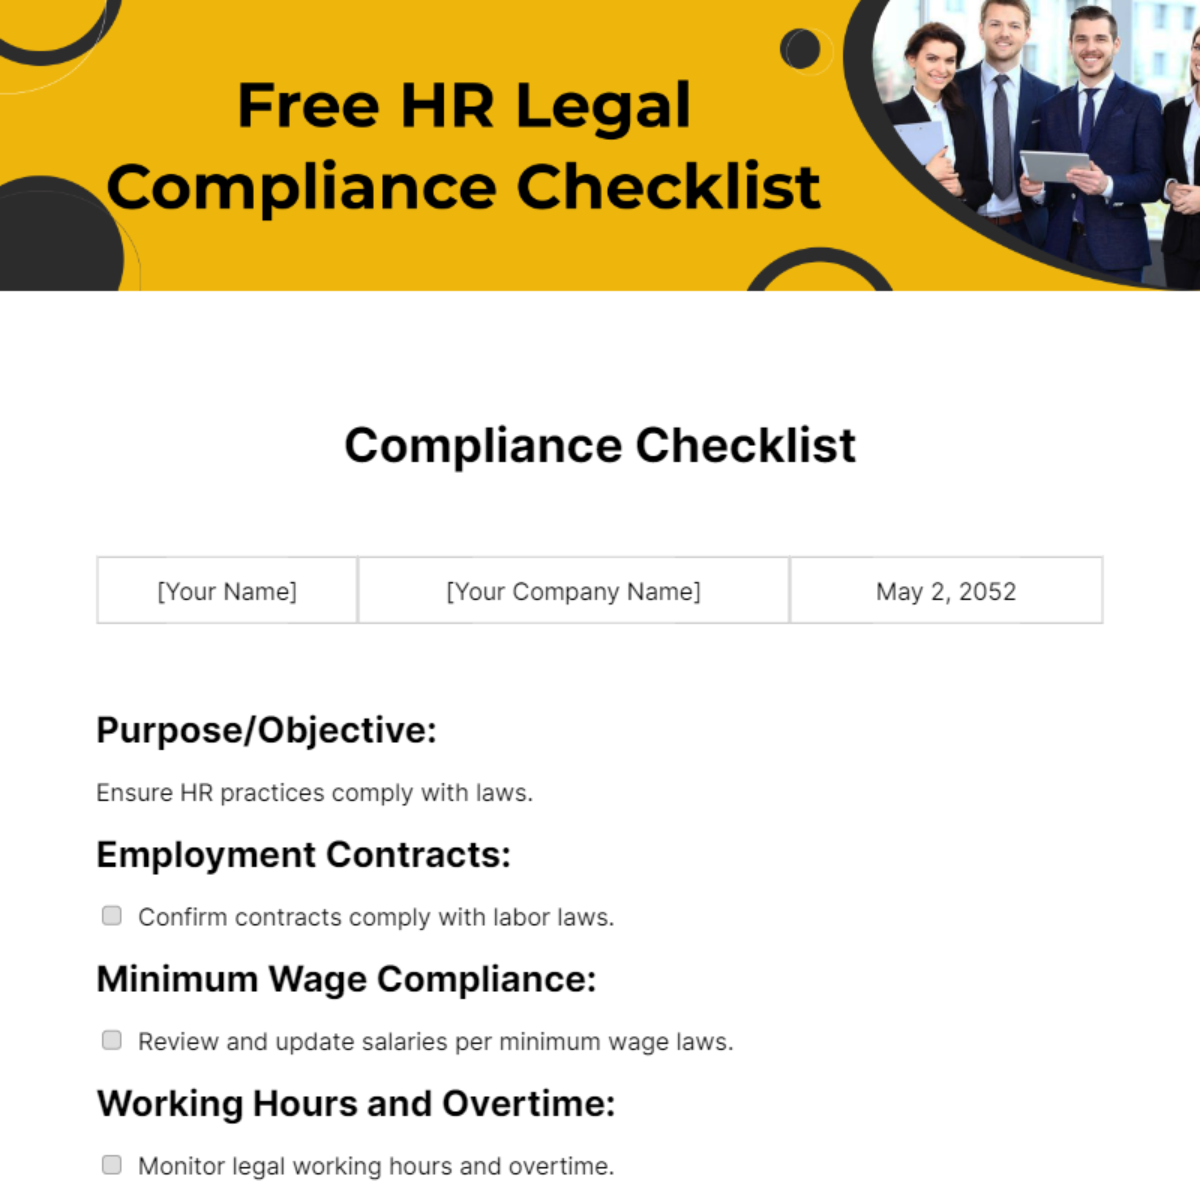 HR Legal Compliance Checklist Template